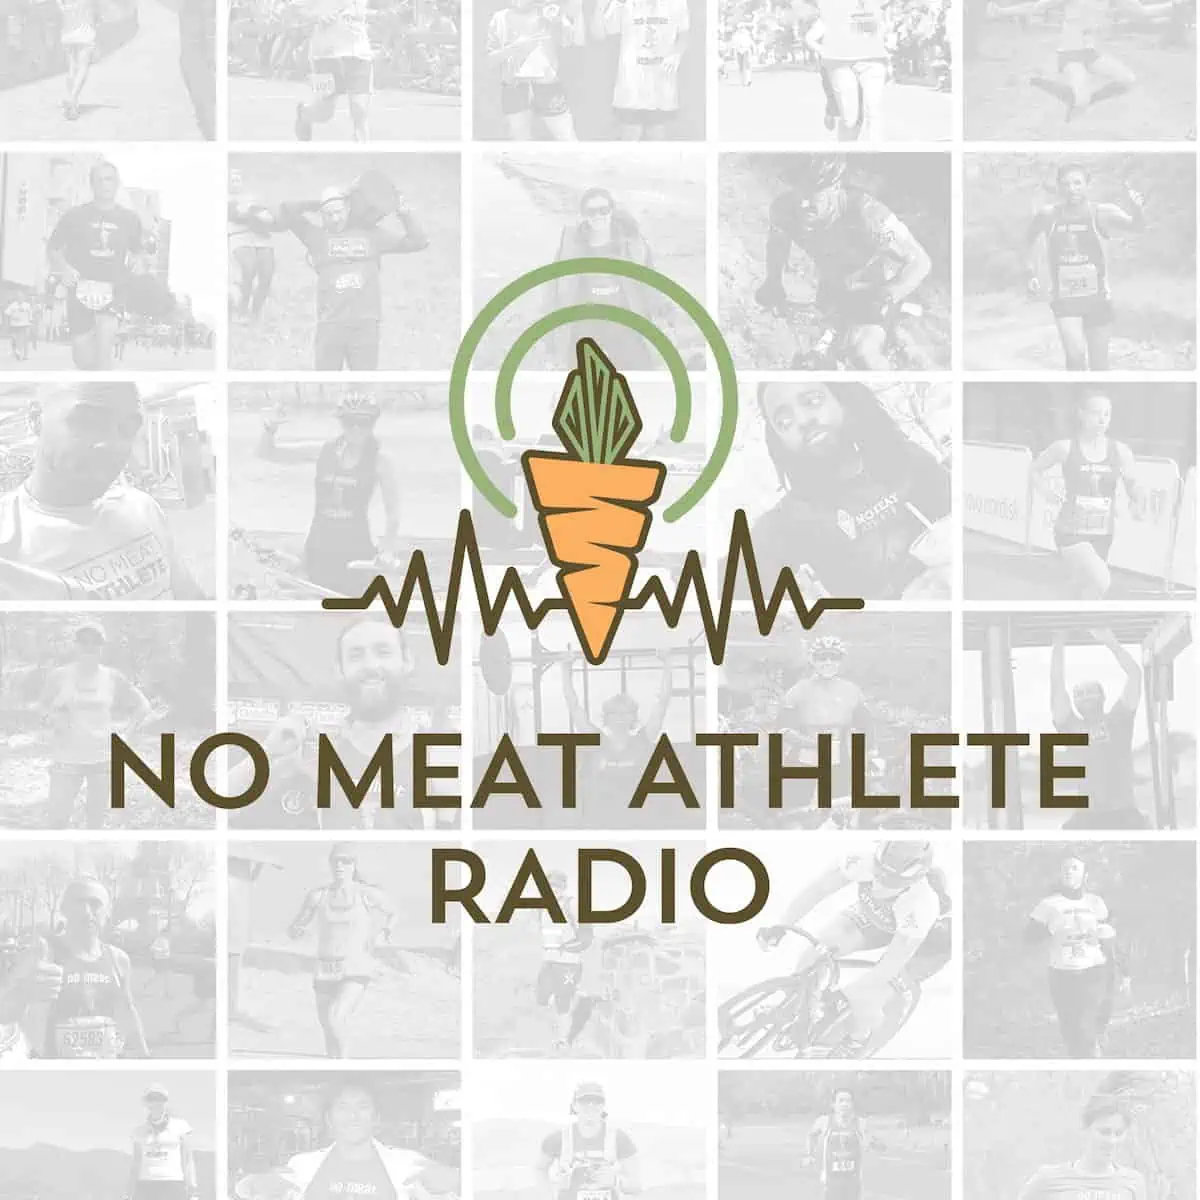 No Meat Athlete Radio cover art.